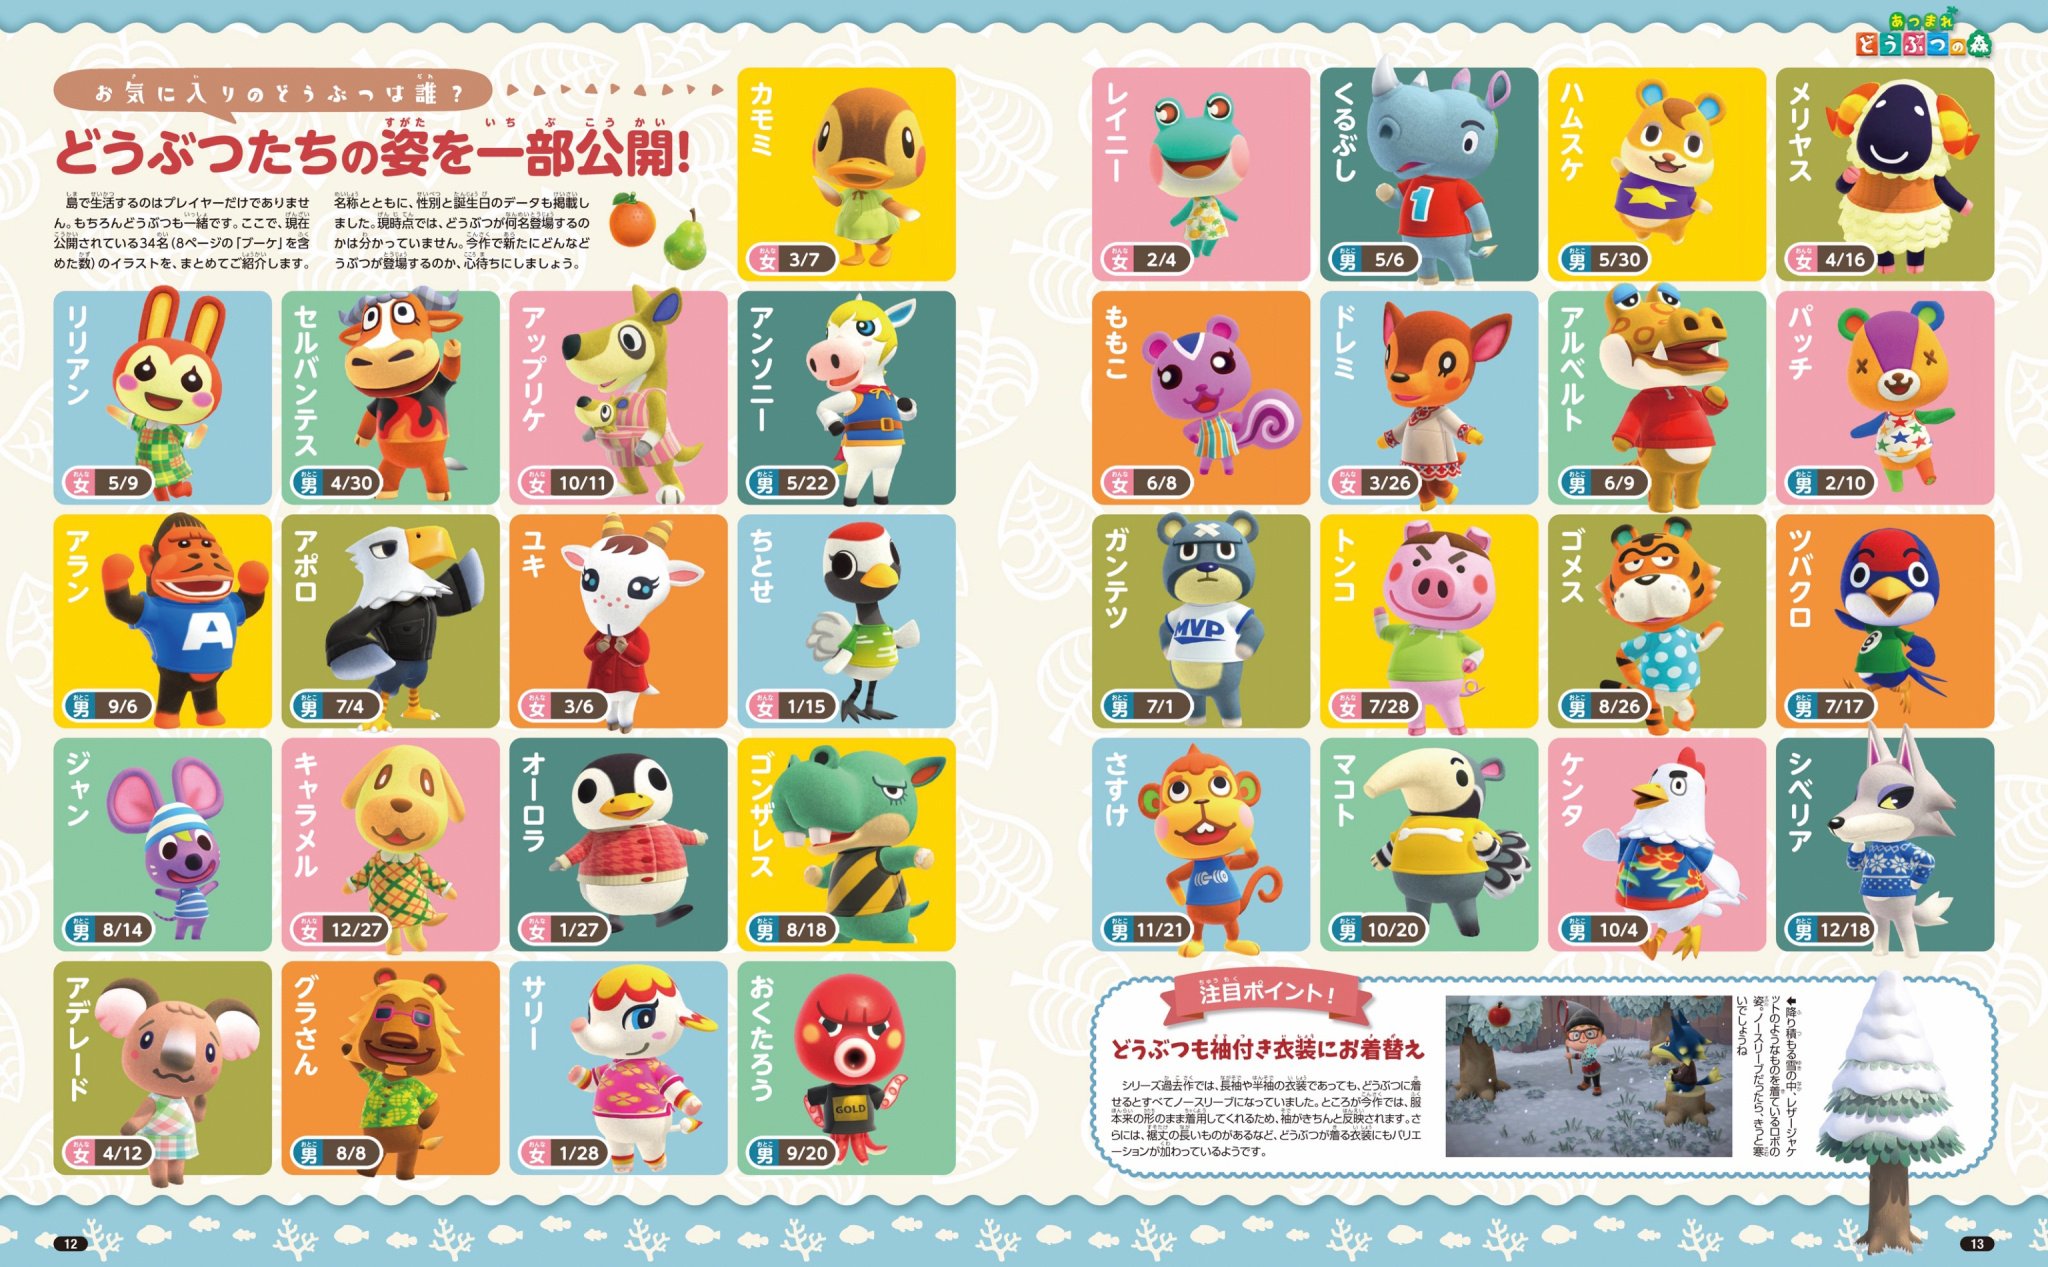 Animal Crossing New Horizons Character Renders Appear Long